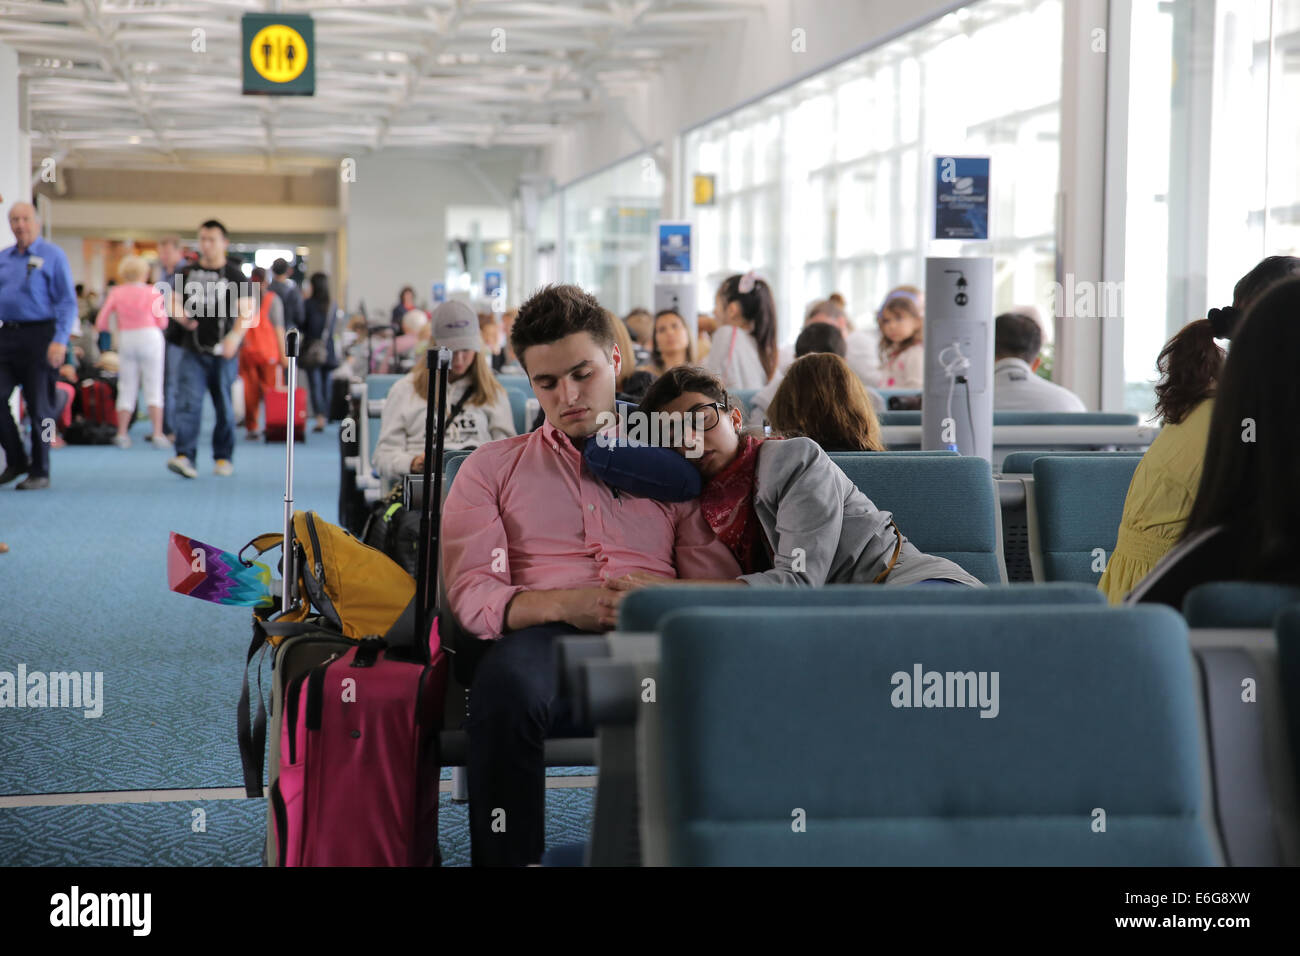 müde, erschöpft Passagier Läppen im Flughafen boarding Gate-Bereich Stockfoto